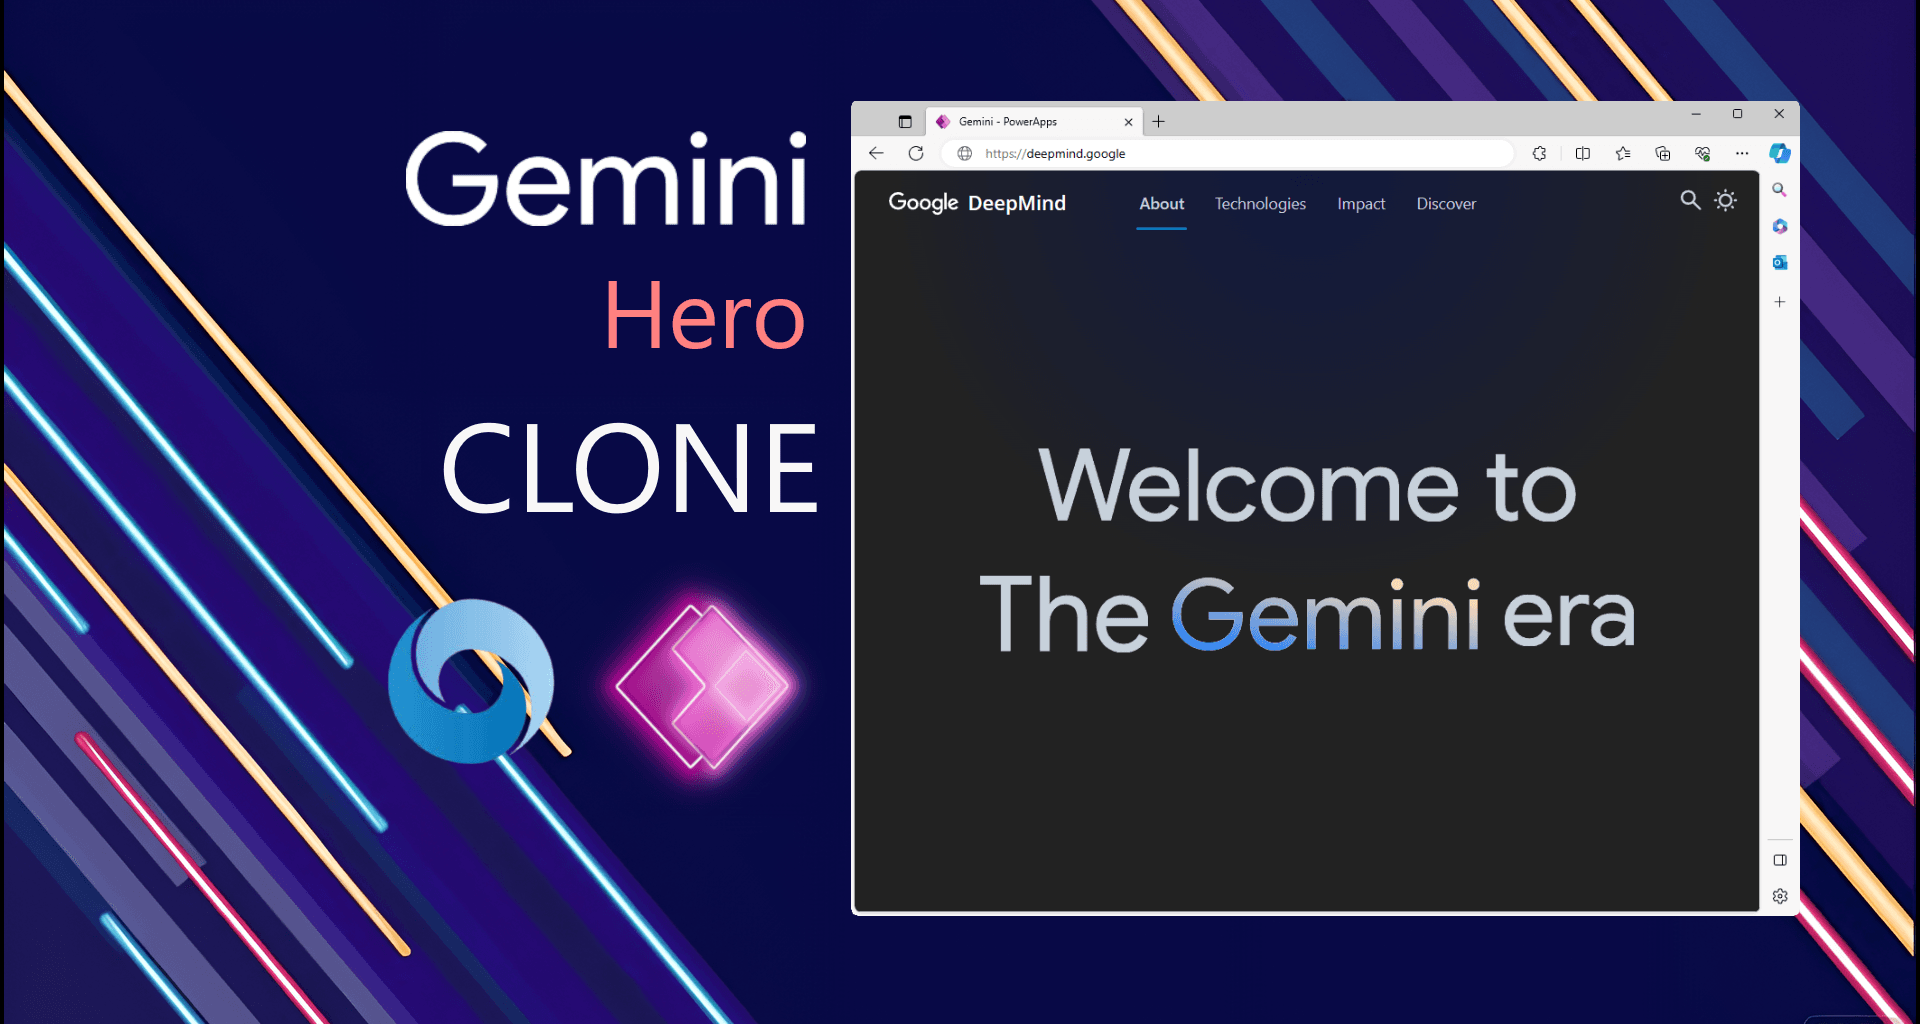 DeepMind Gemini Hero Page Clone